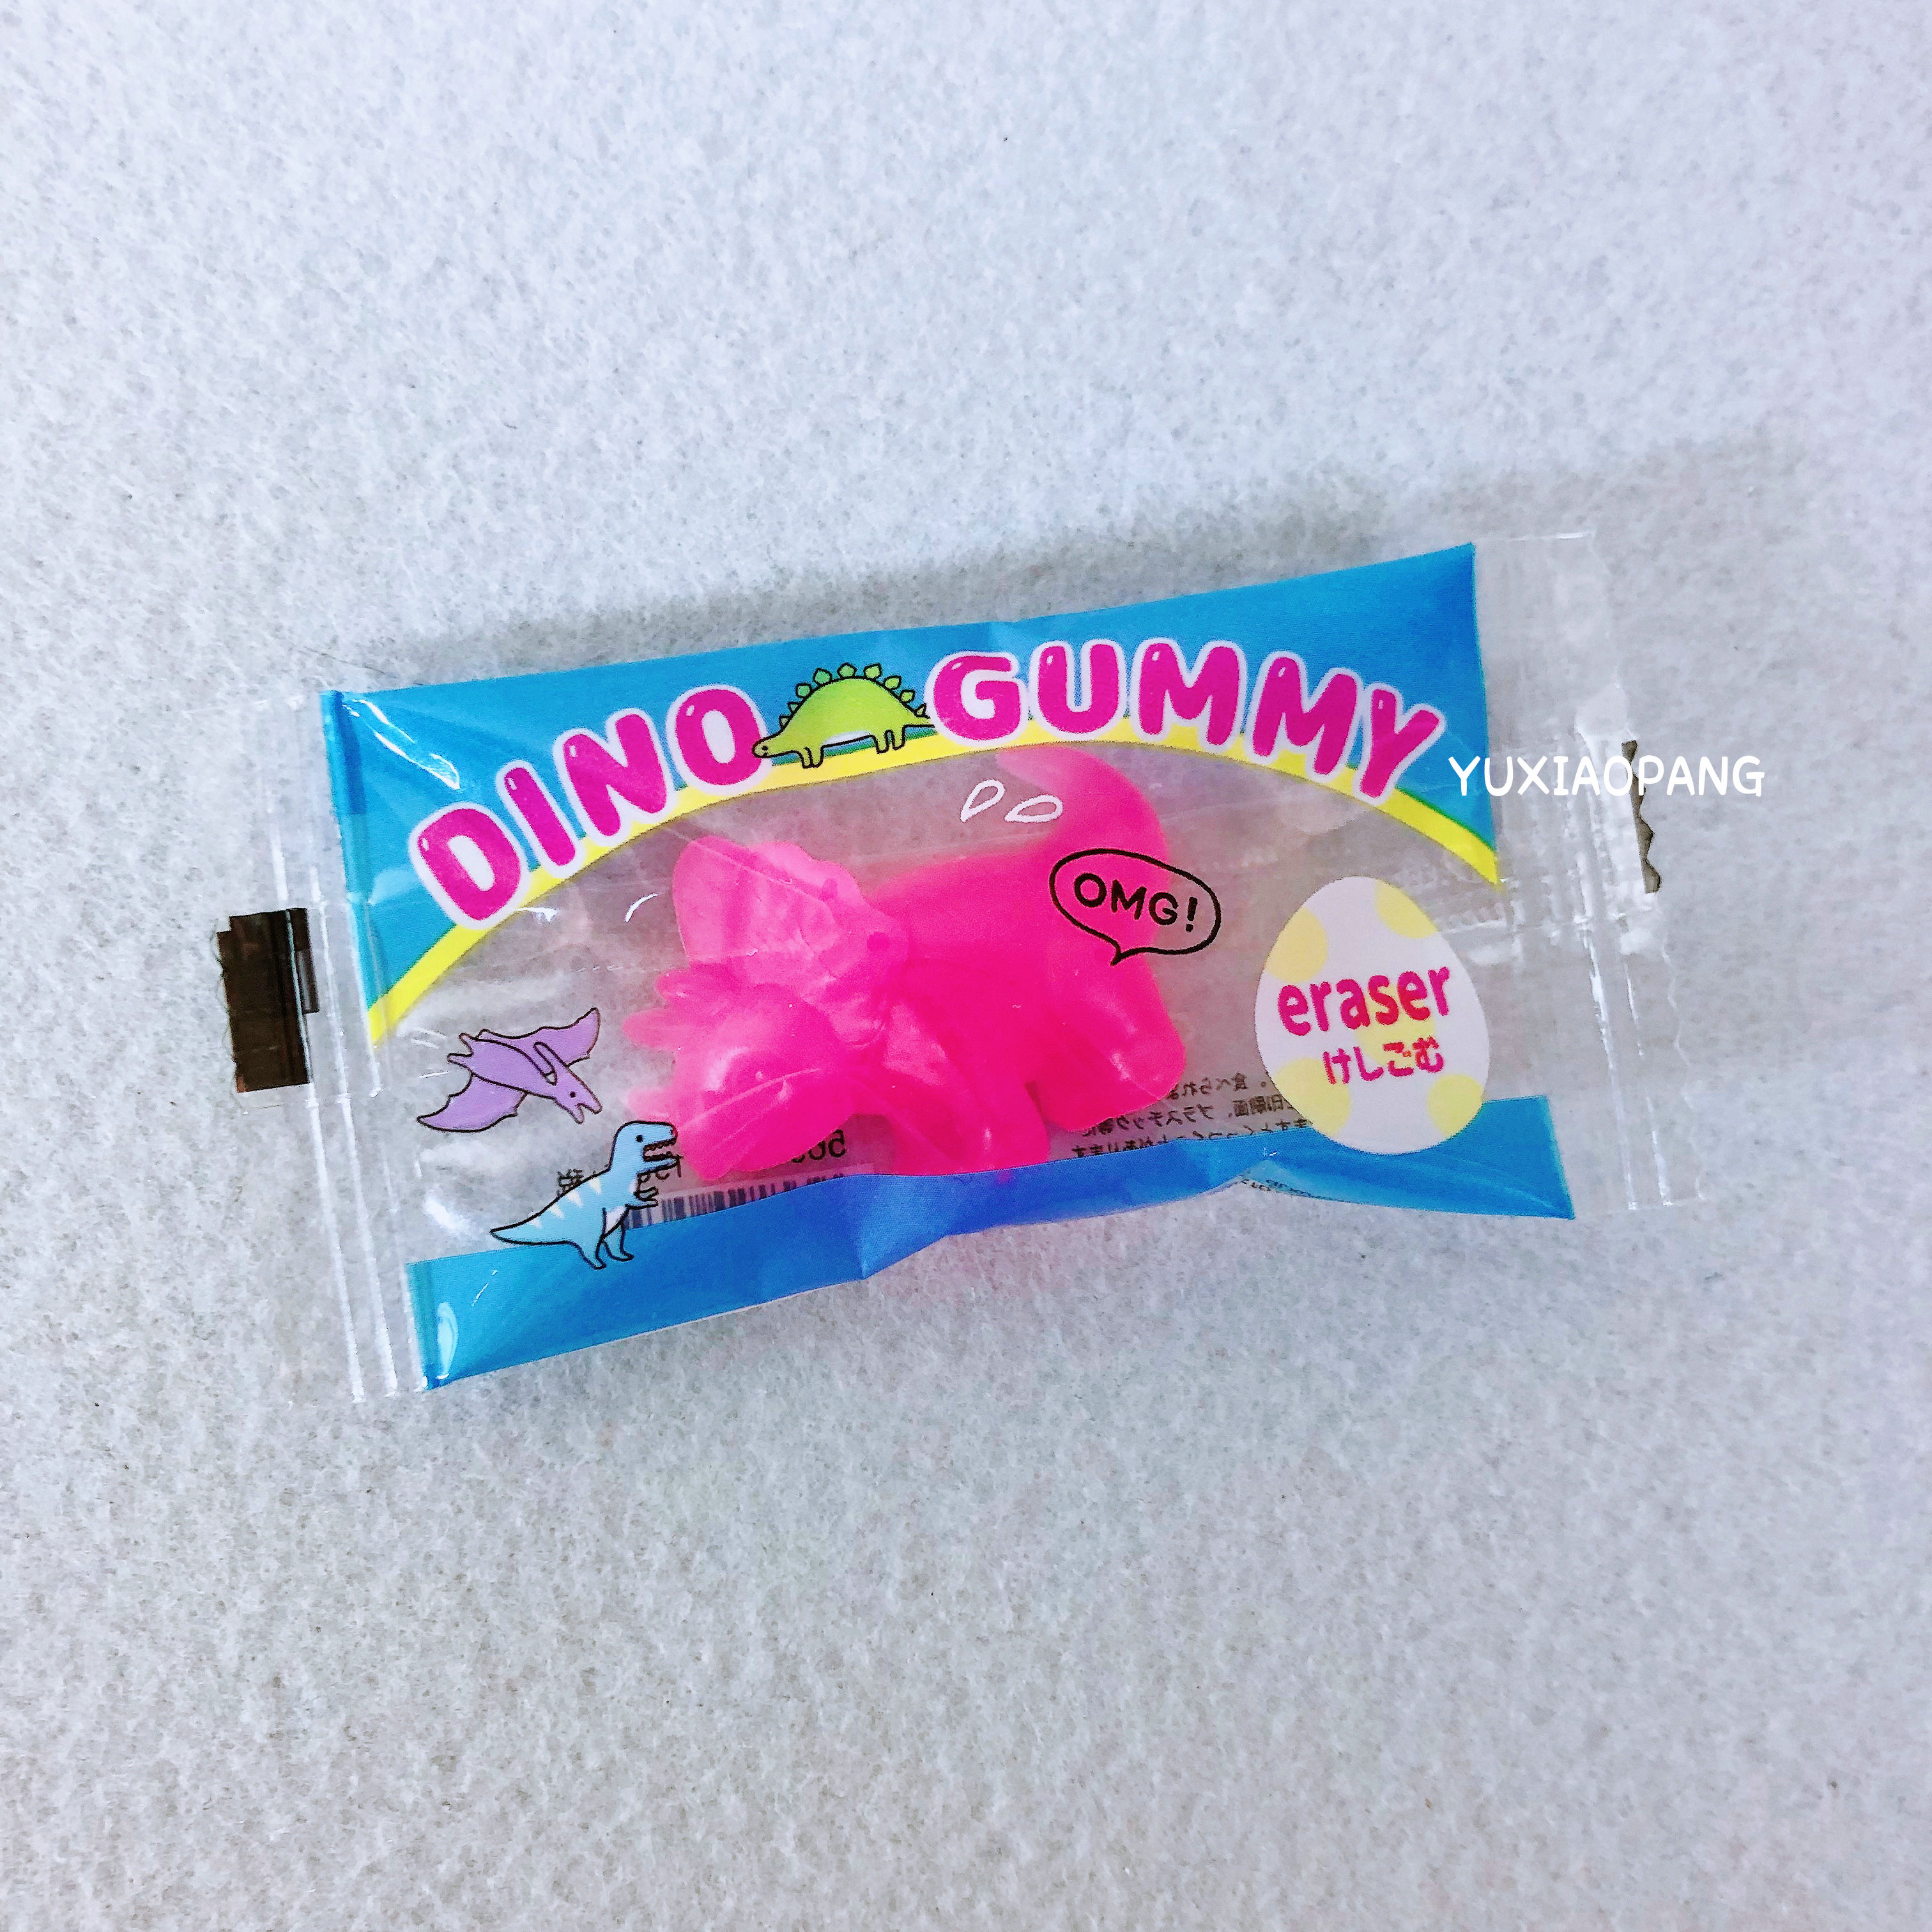 Little dinosaur gradient love limited Japan crux limited edition candy shape eraser girl heart